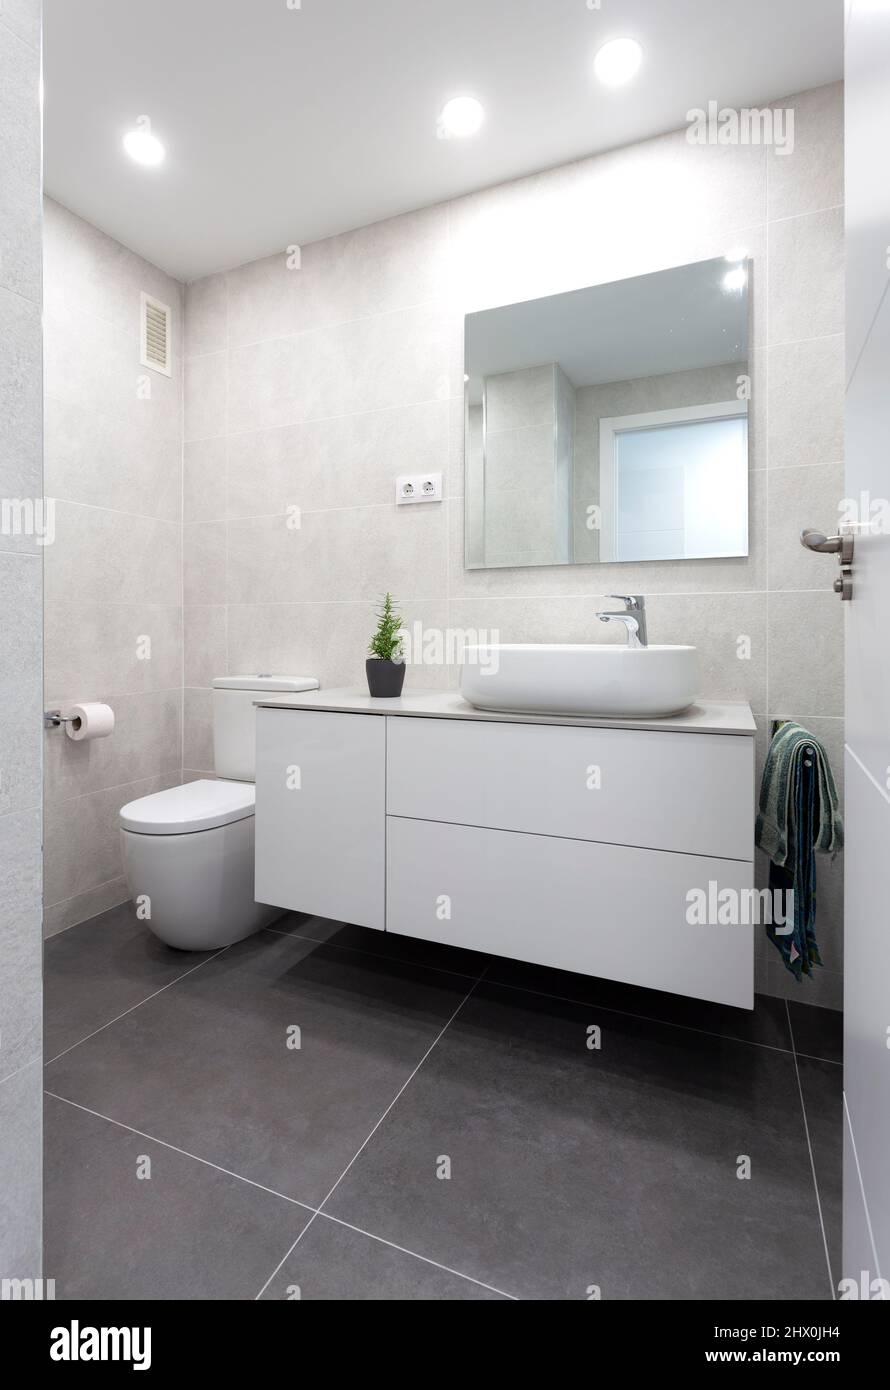 Baño blanco con suelo gris oscuro Fotografía de stock - Alamy